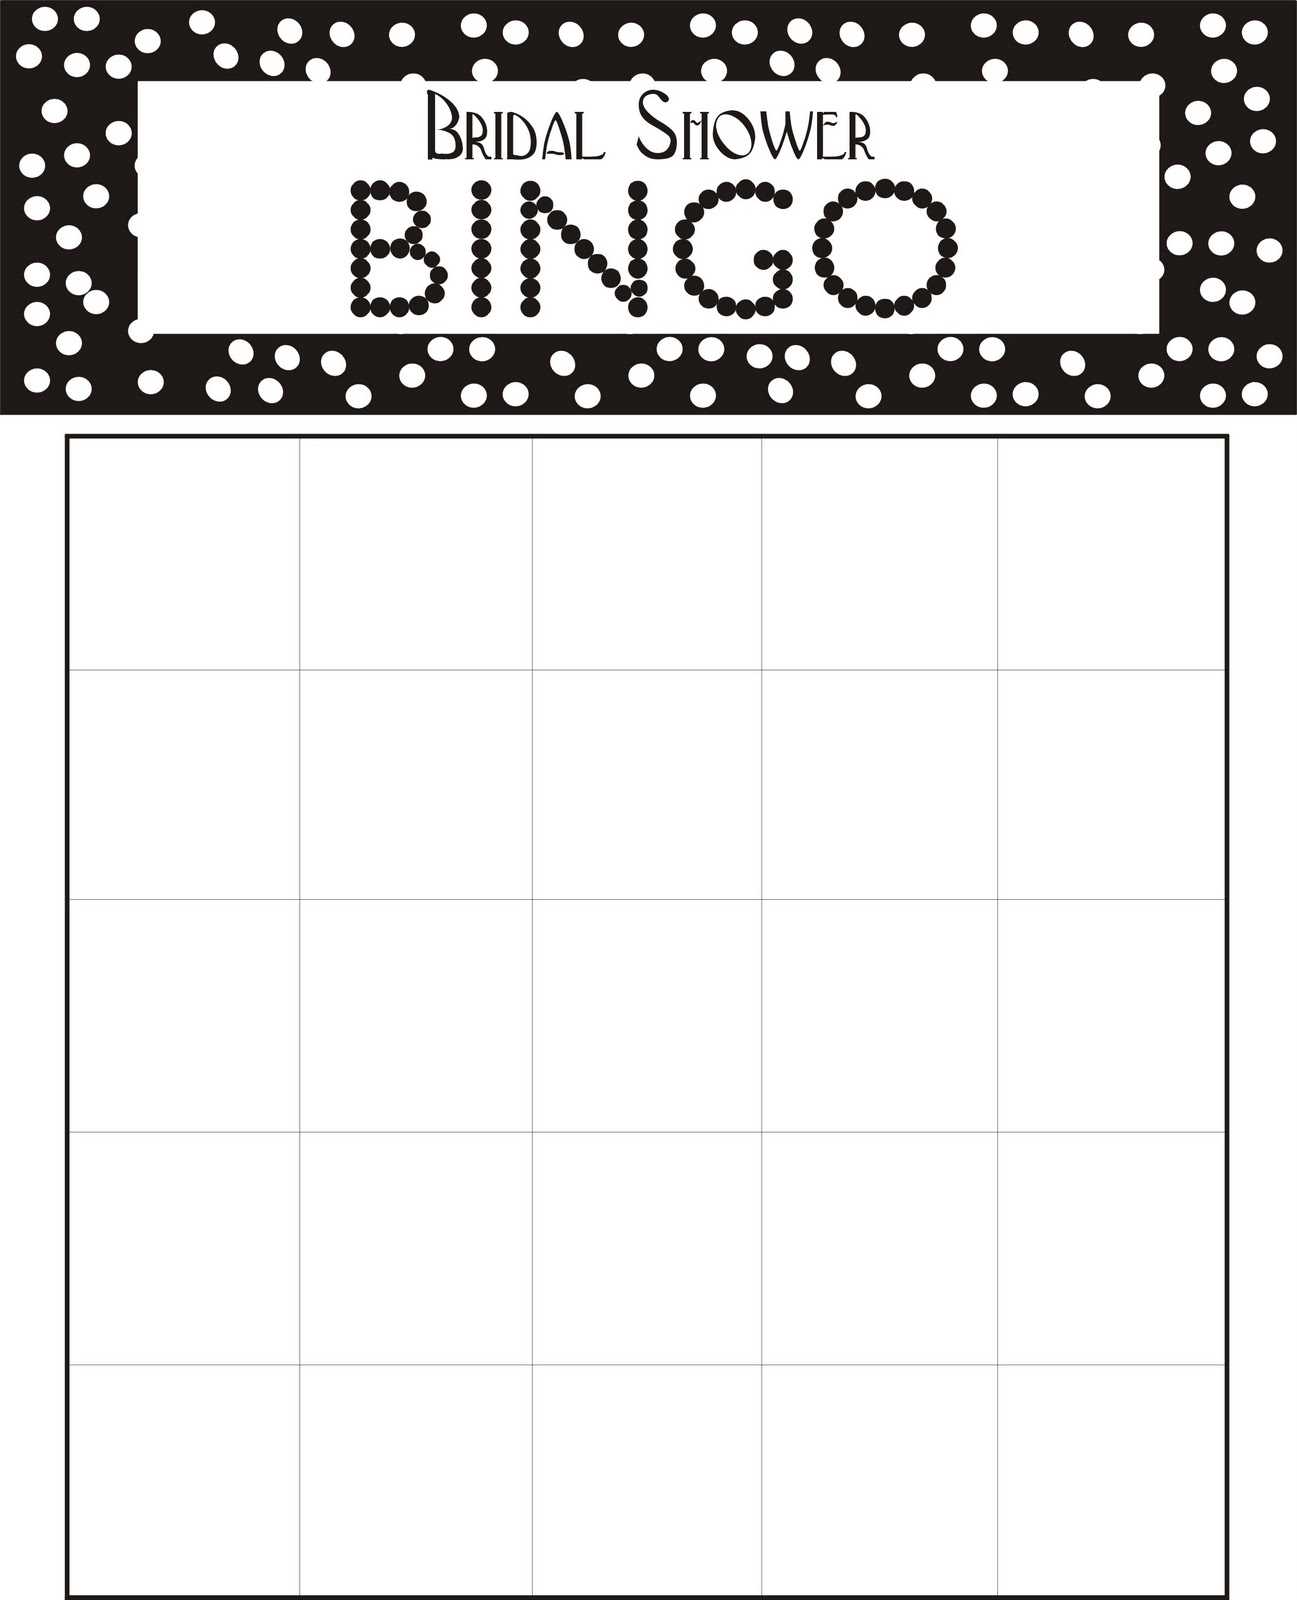 Photo : Personalized Bridal Shower Bingo Image Regarding Blank Bridal Shower Bingo Template